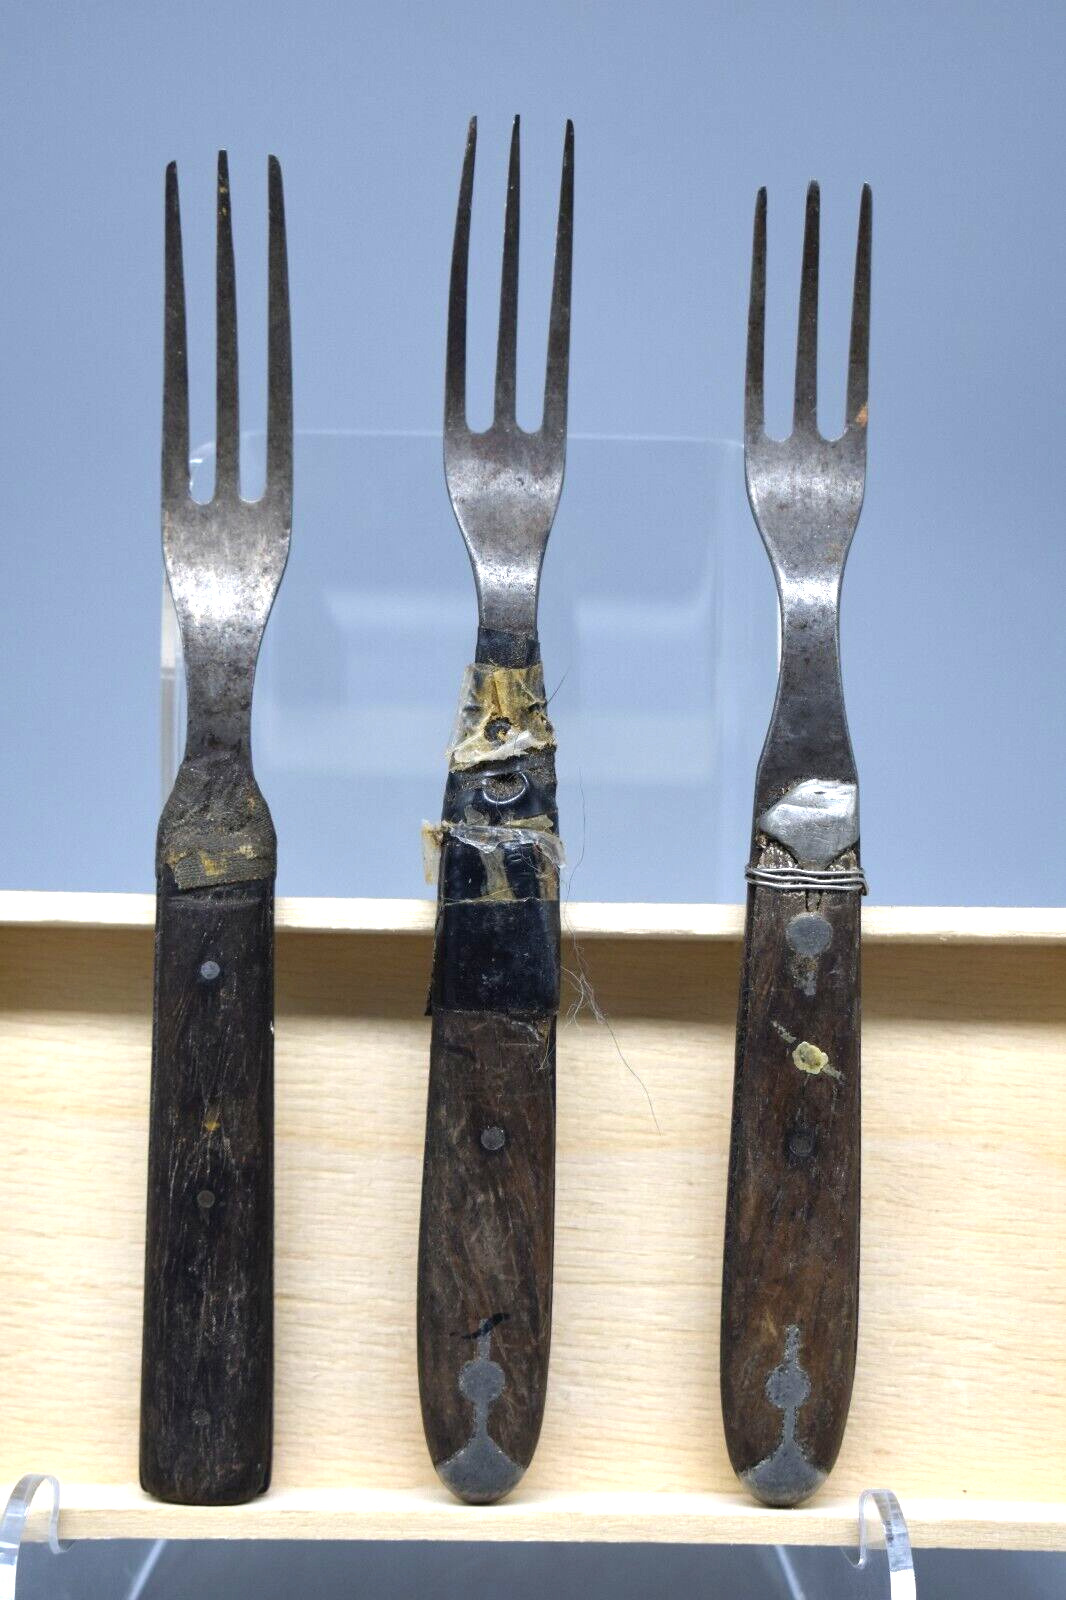 Three Vintage Wooden Handle Forks from Sellers Mid Missouri Century Farm.  